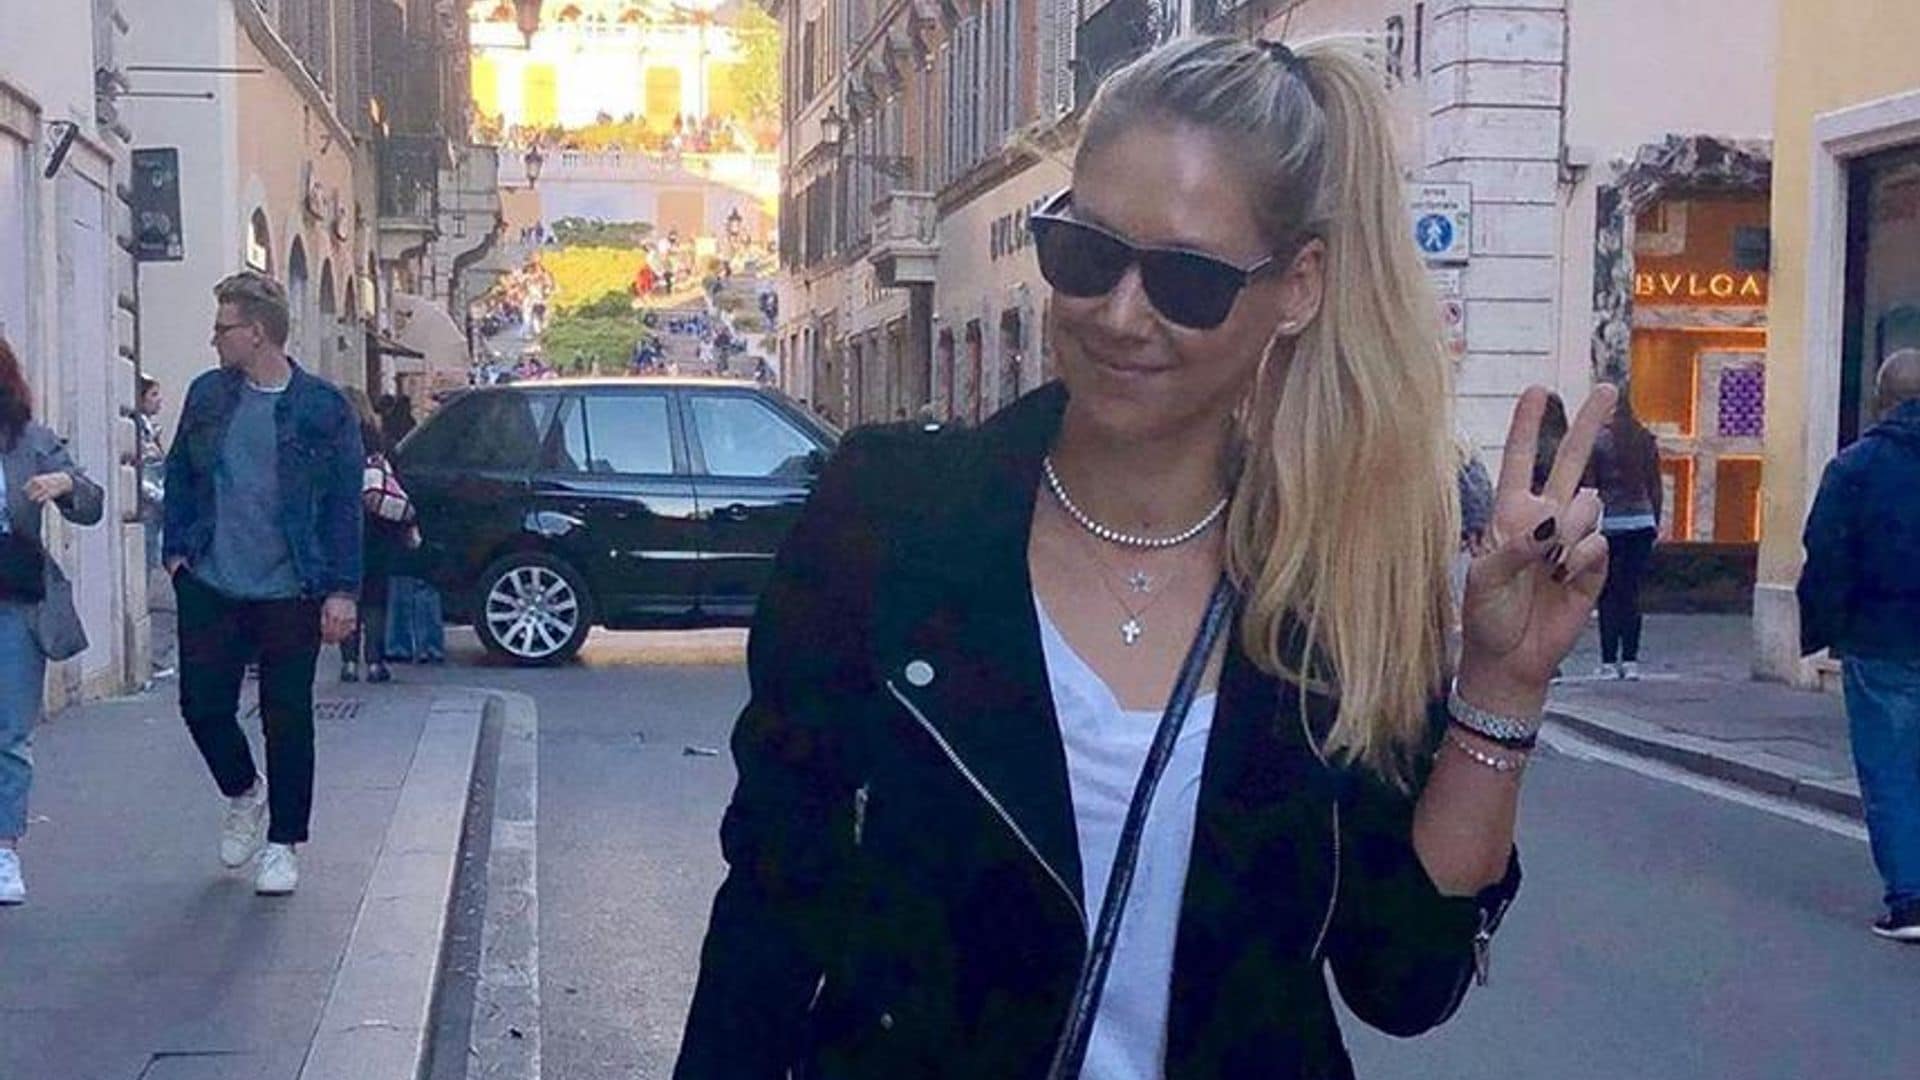 Anna Kournikova reveals her secret to fashion and style